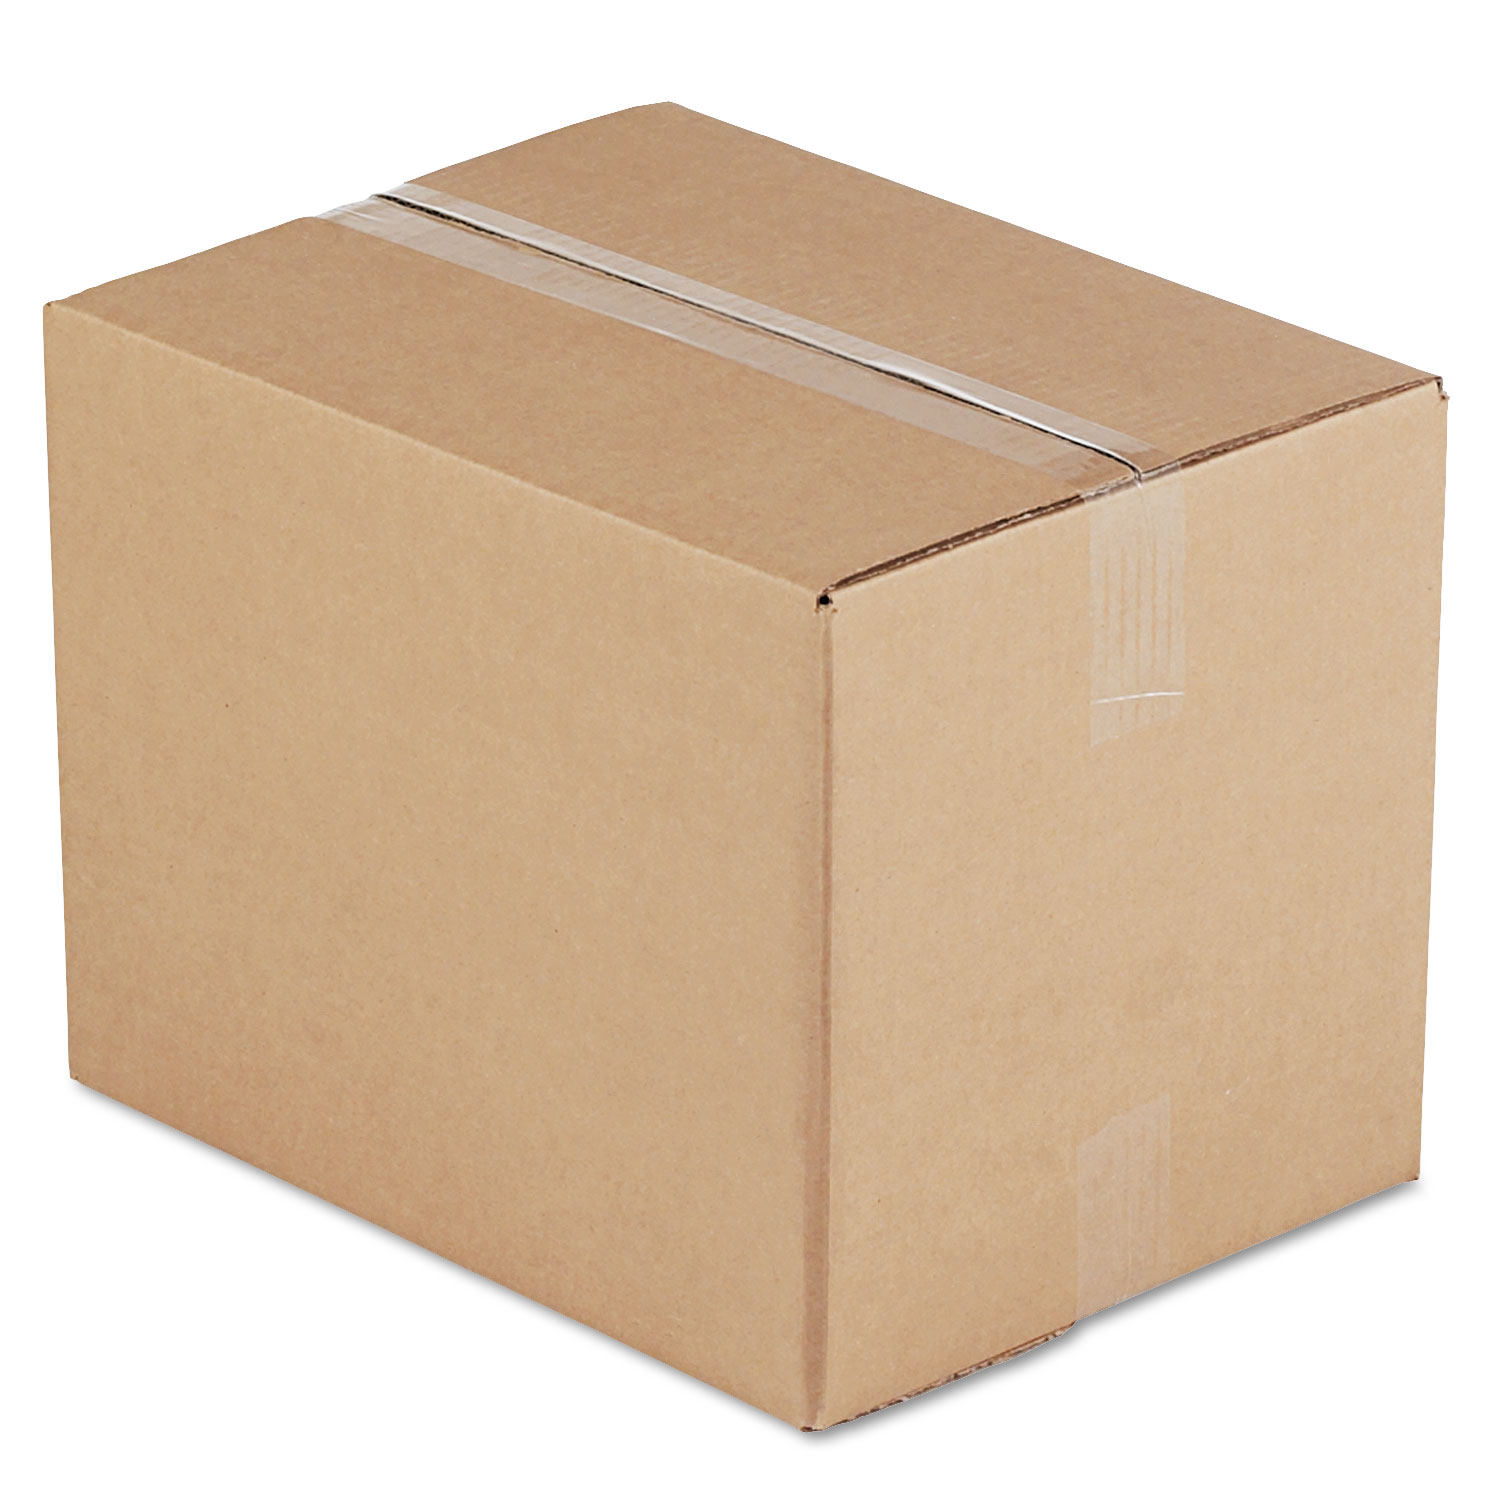 Brown Corrugated - Fixed-Depth Shipping Boxes, 16l x 12w x 12h, 25/Bundle